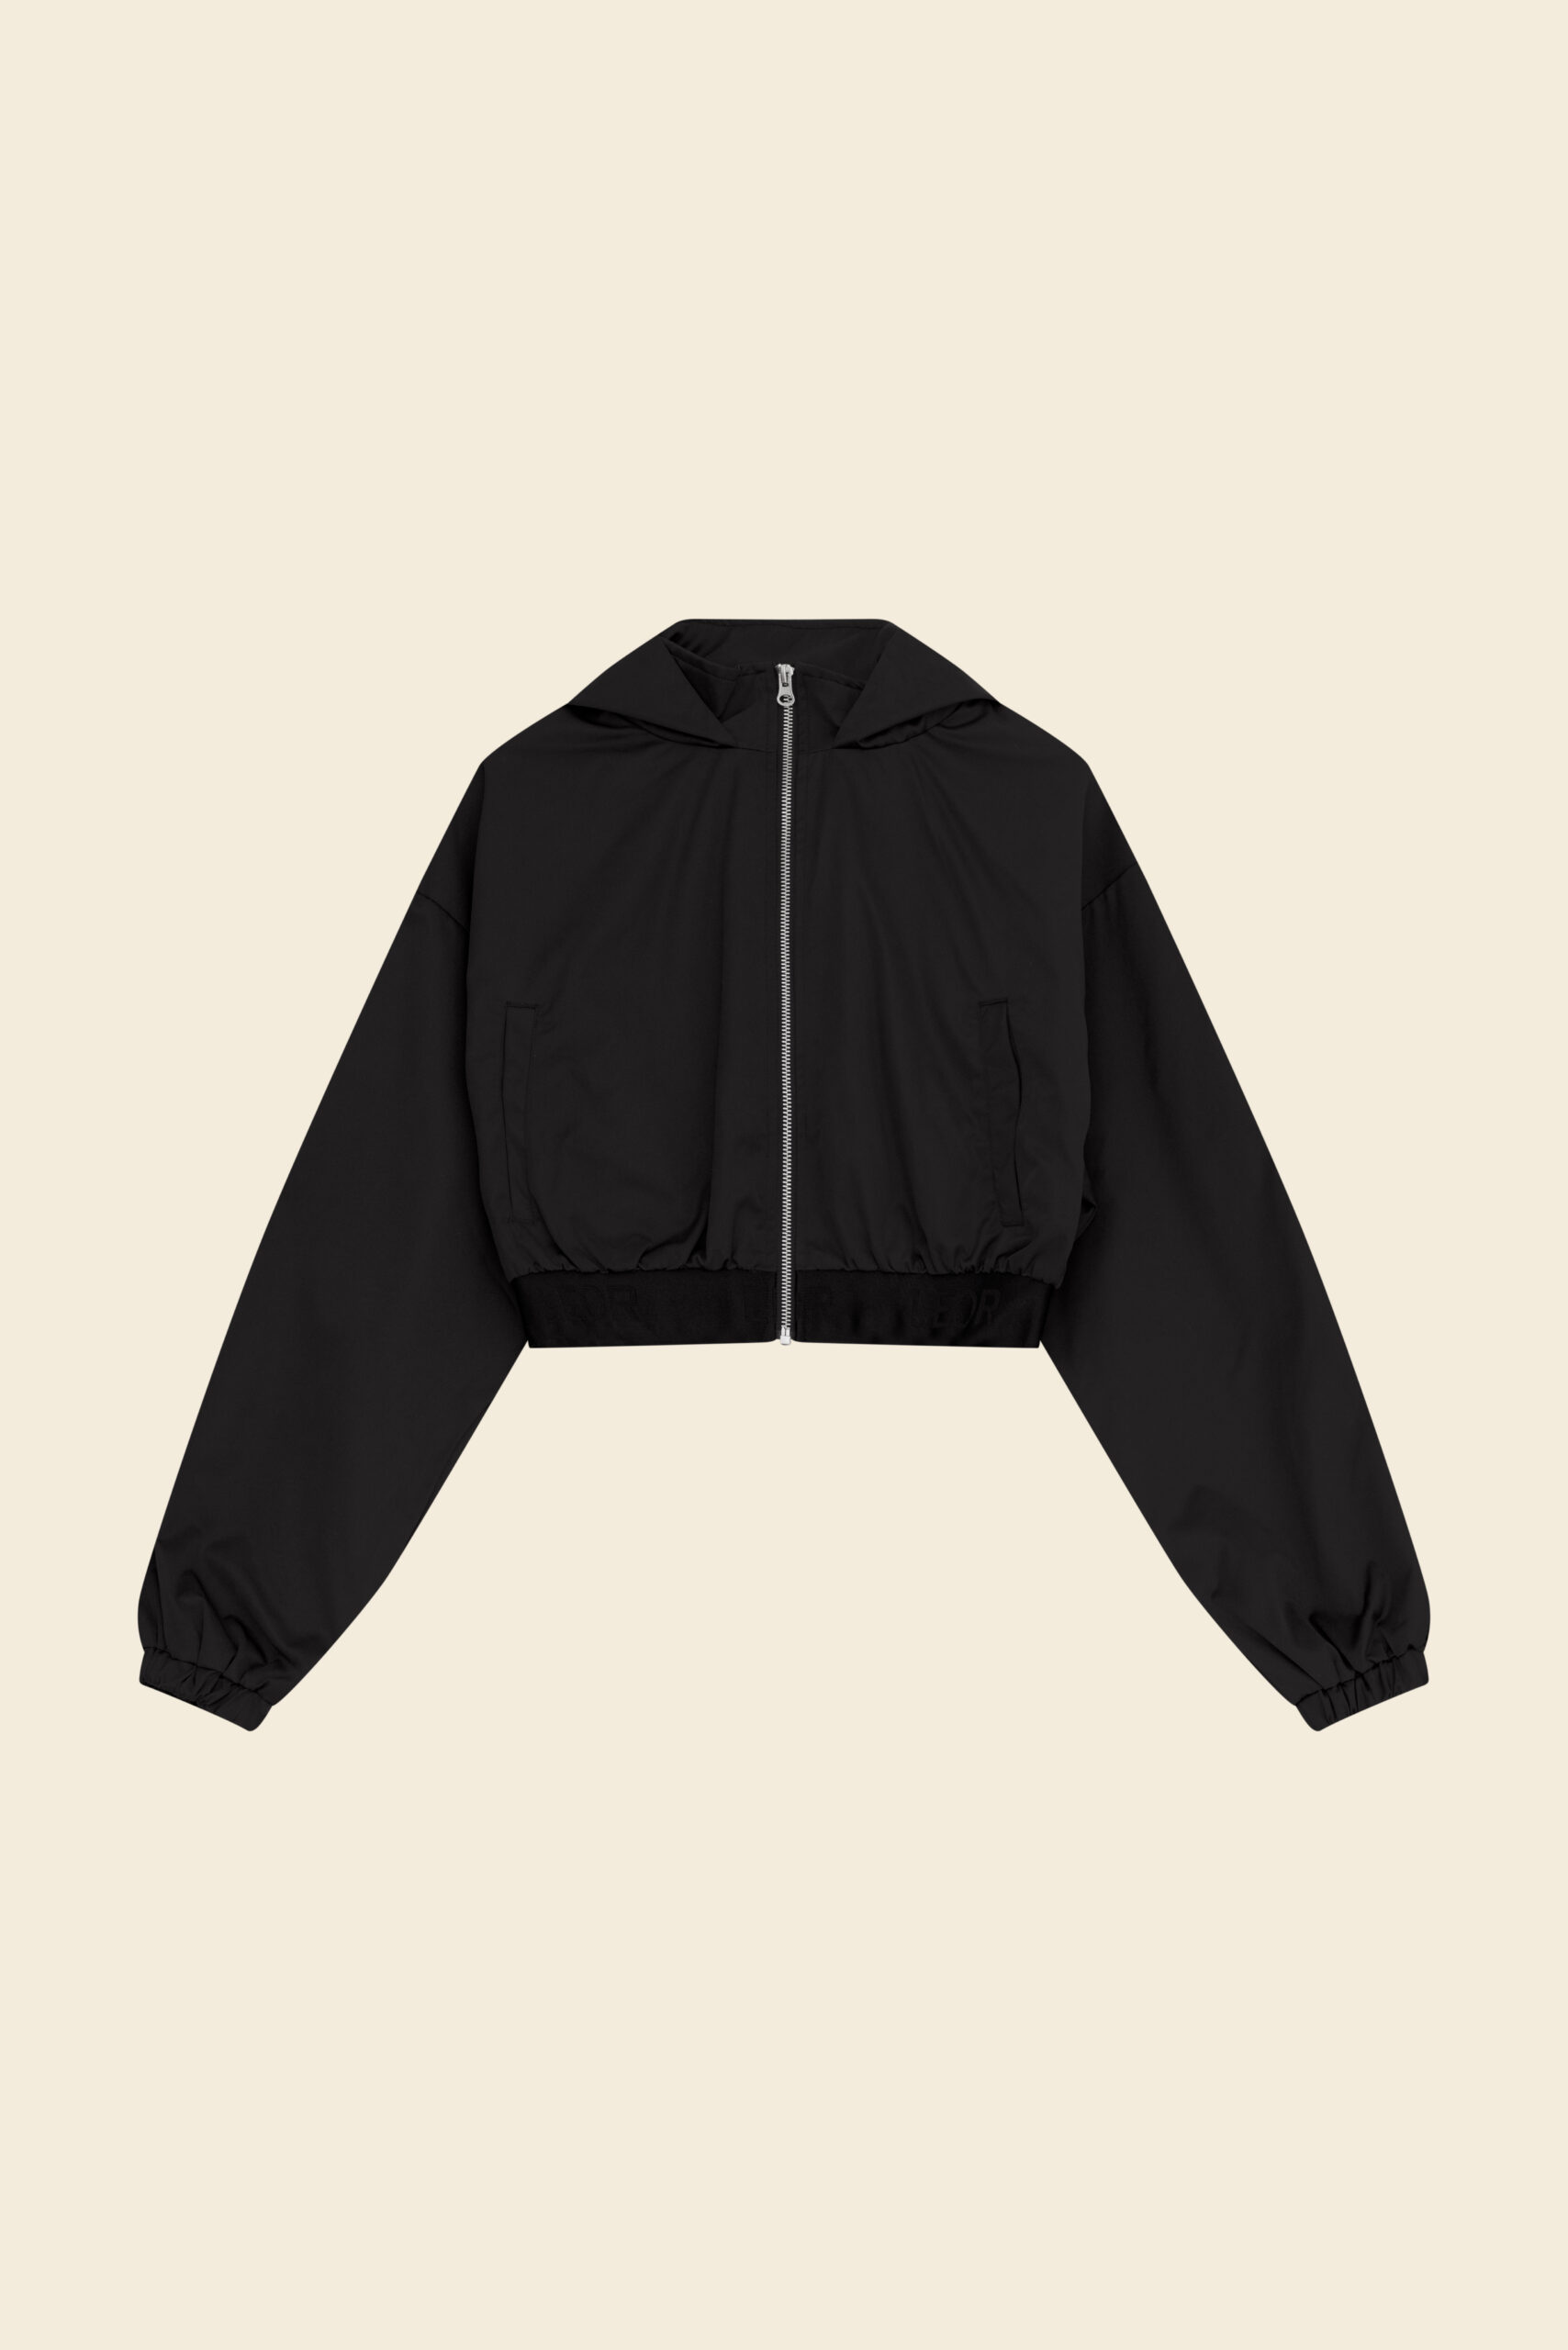 cropepd jacket black 1